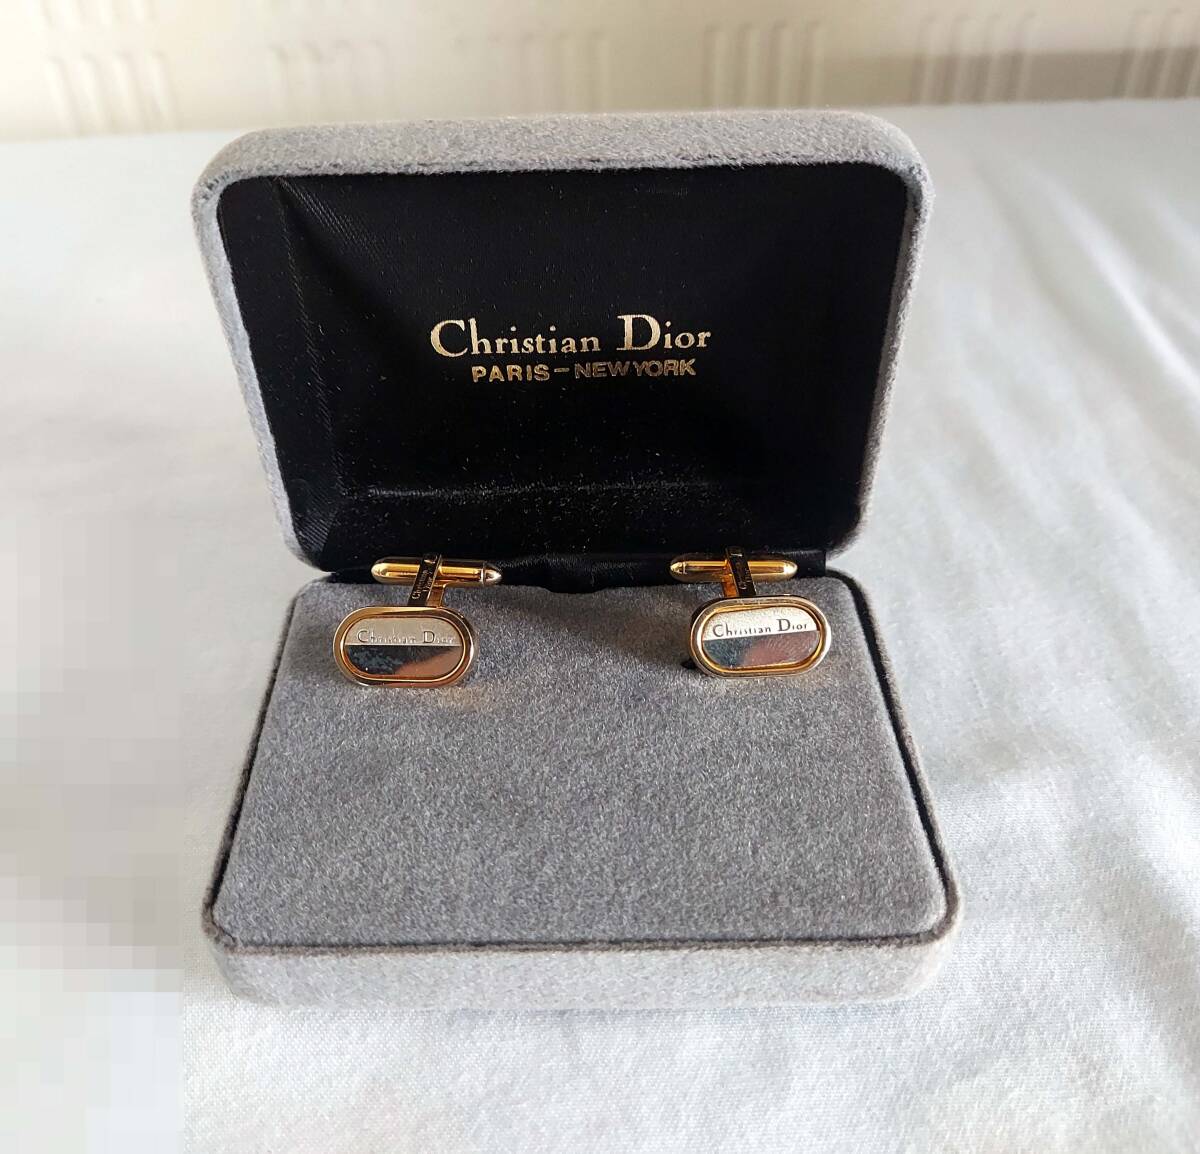 *Christian Dior/ Christian Dior cuffs *